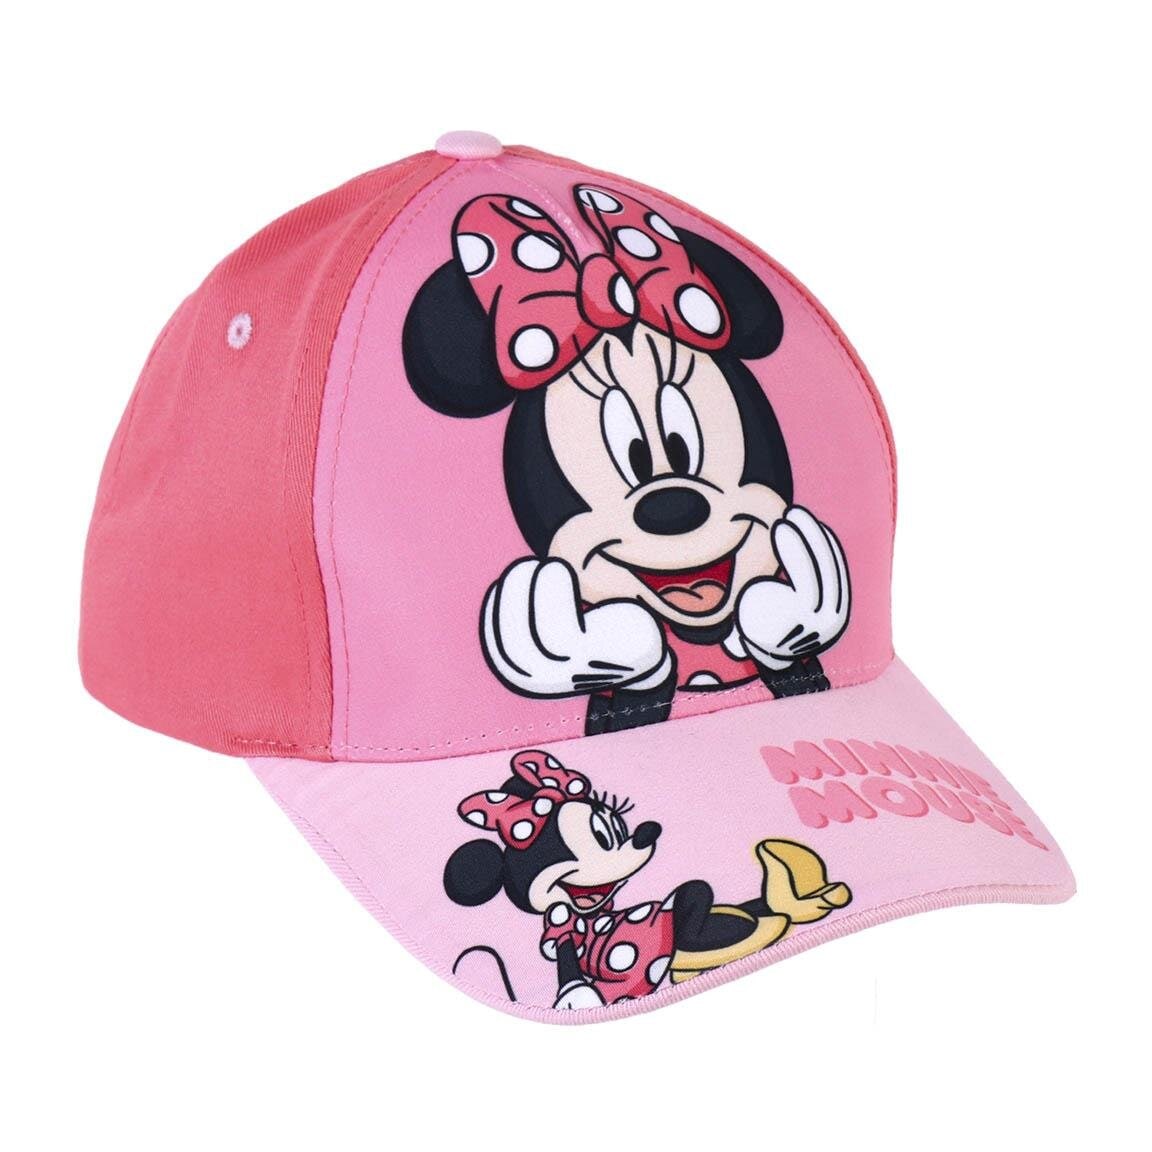 Minnie Mouse - Kinderpet